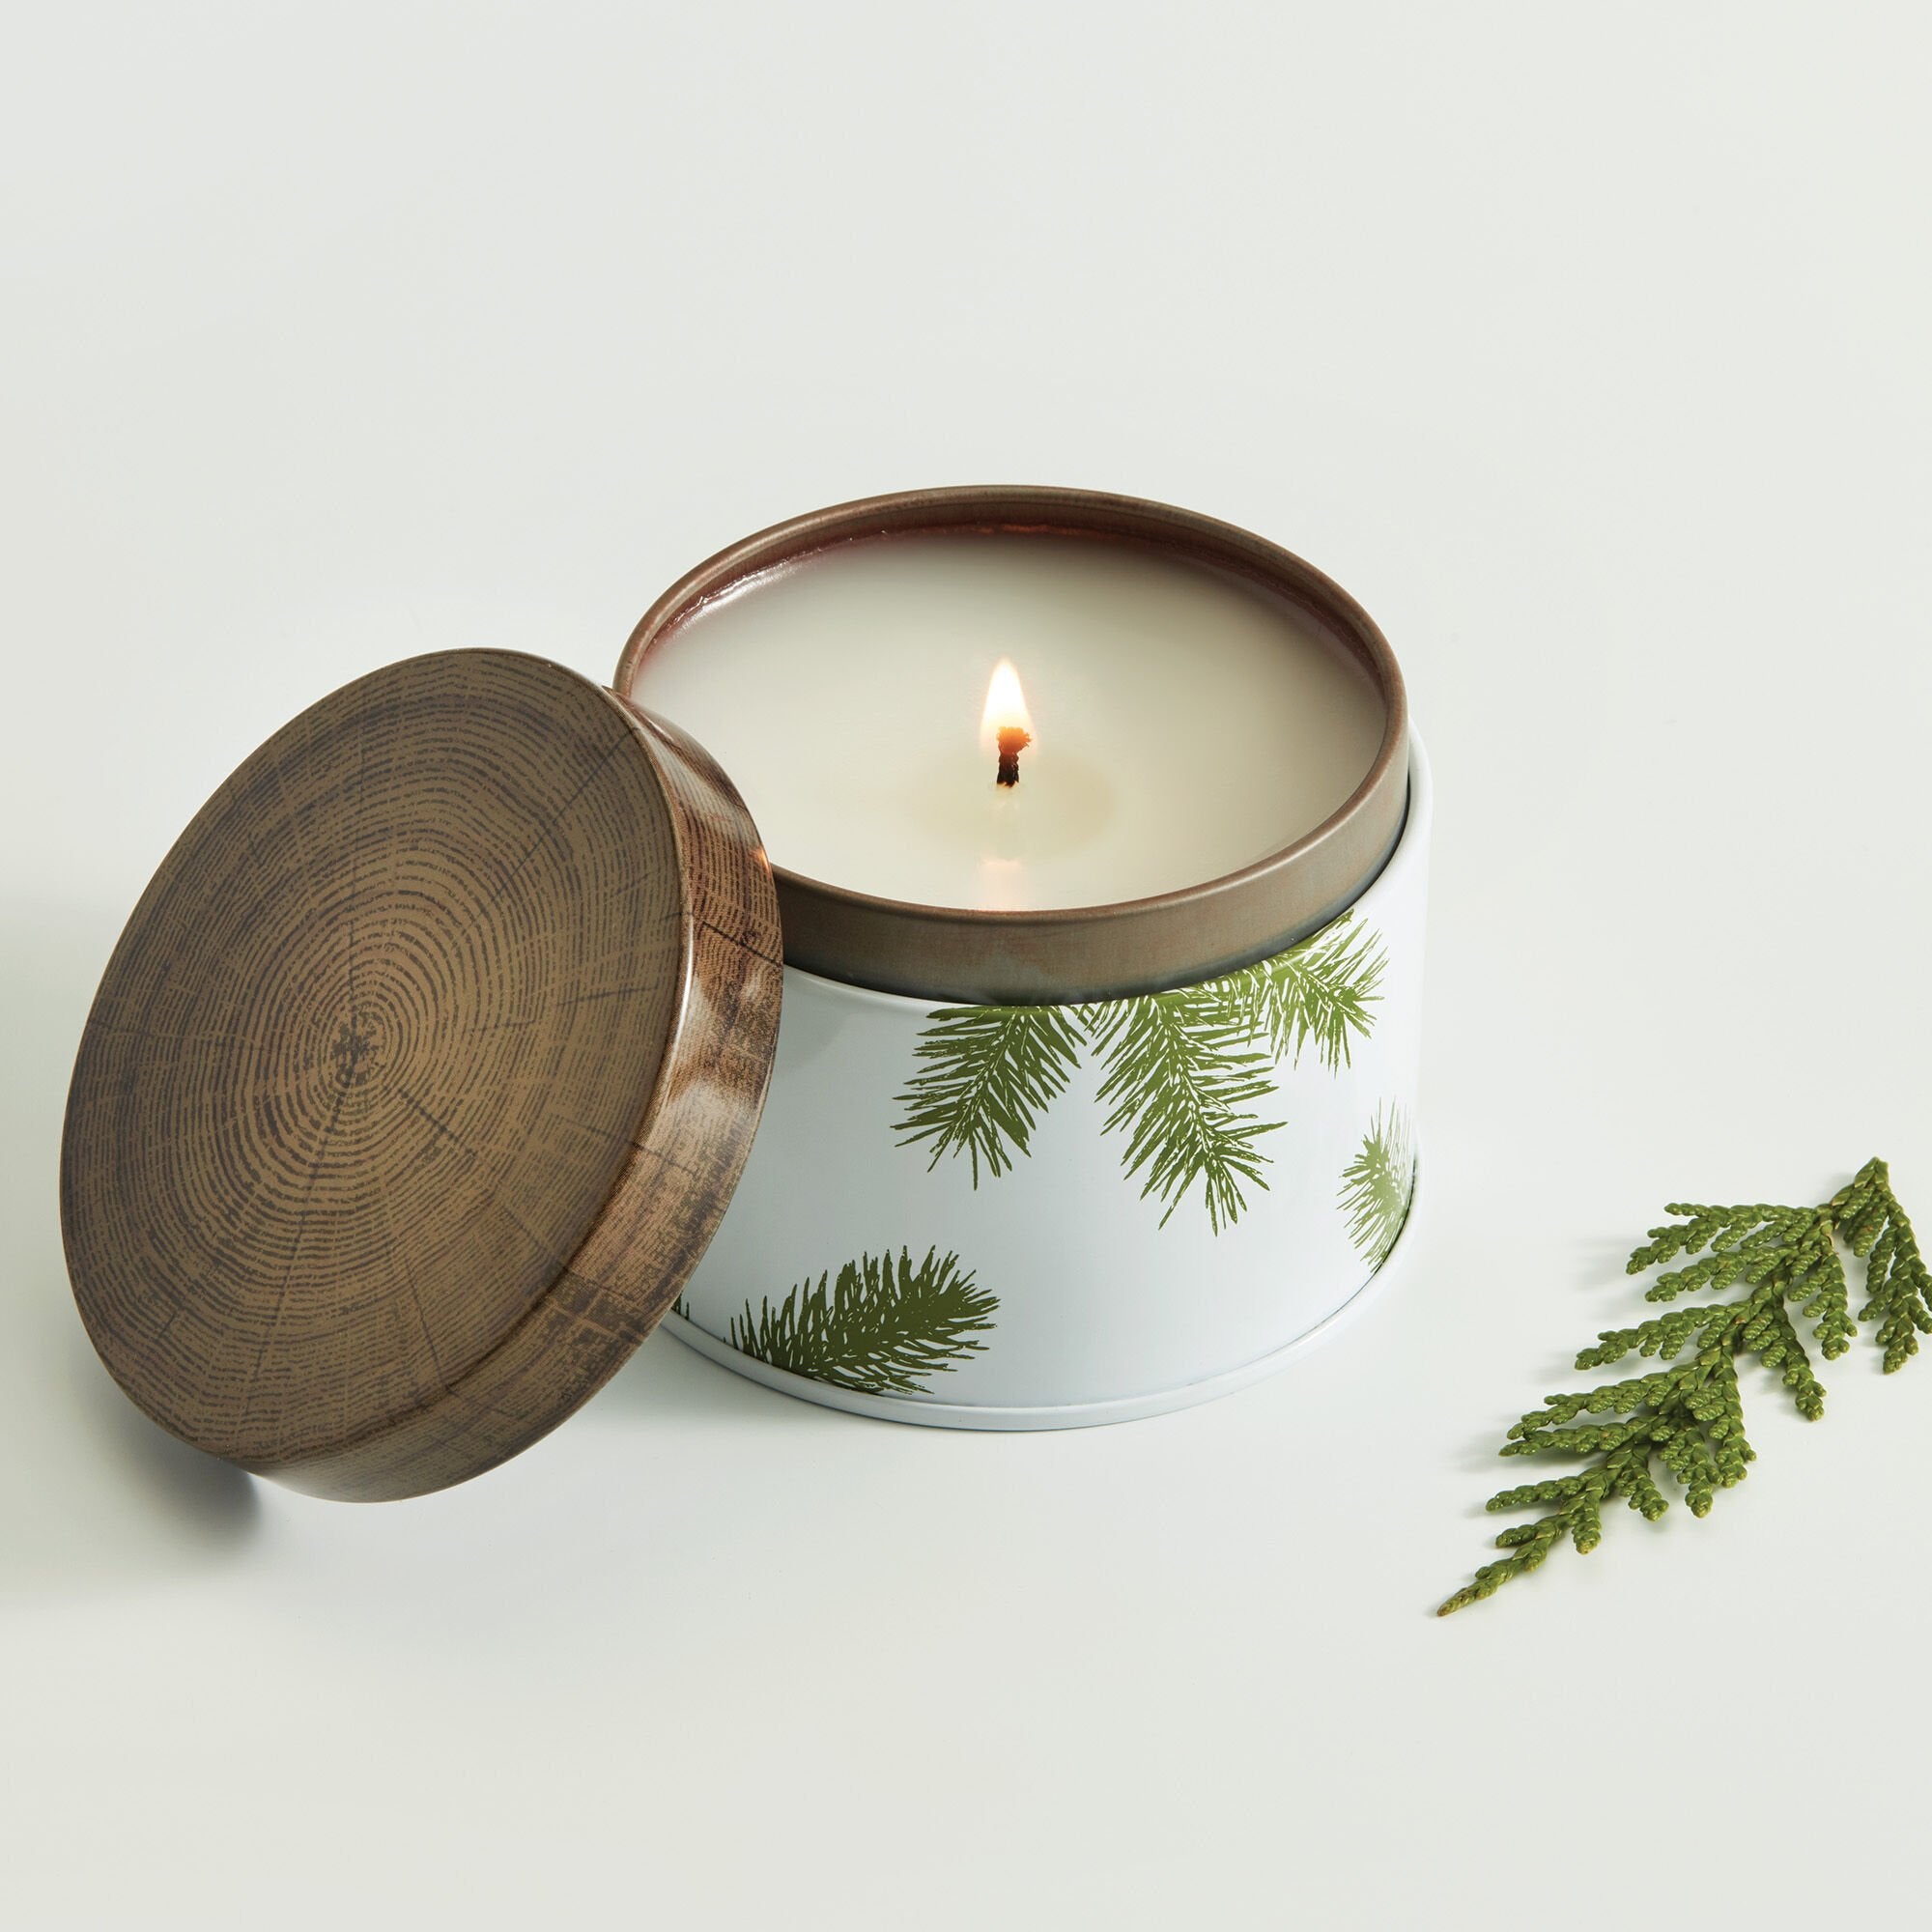 Thymes - Frasier Fir Pine Needle Medium Luminary Candle at